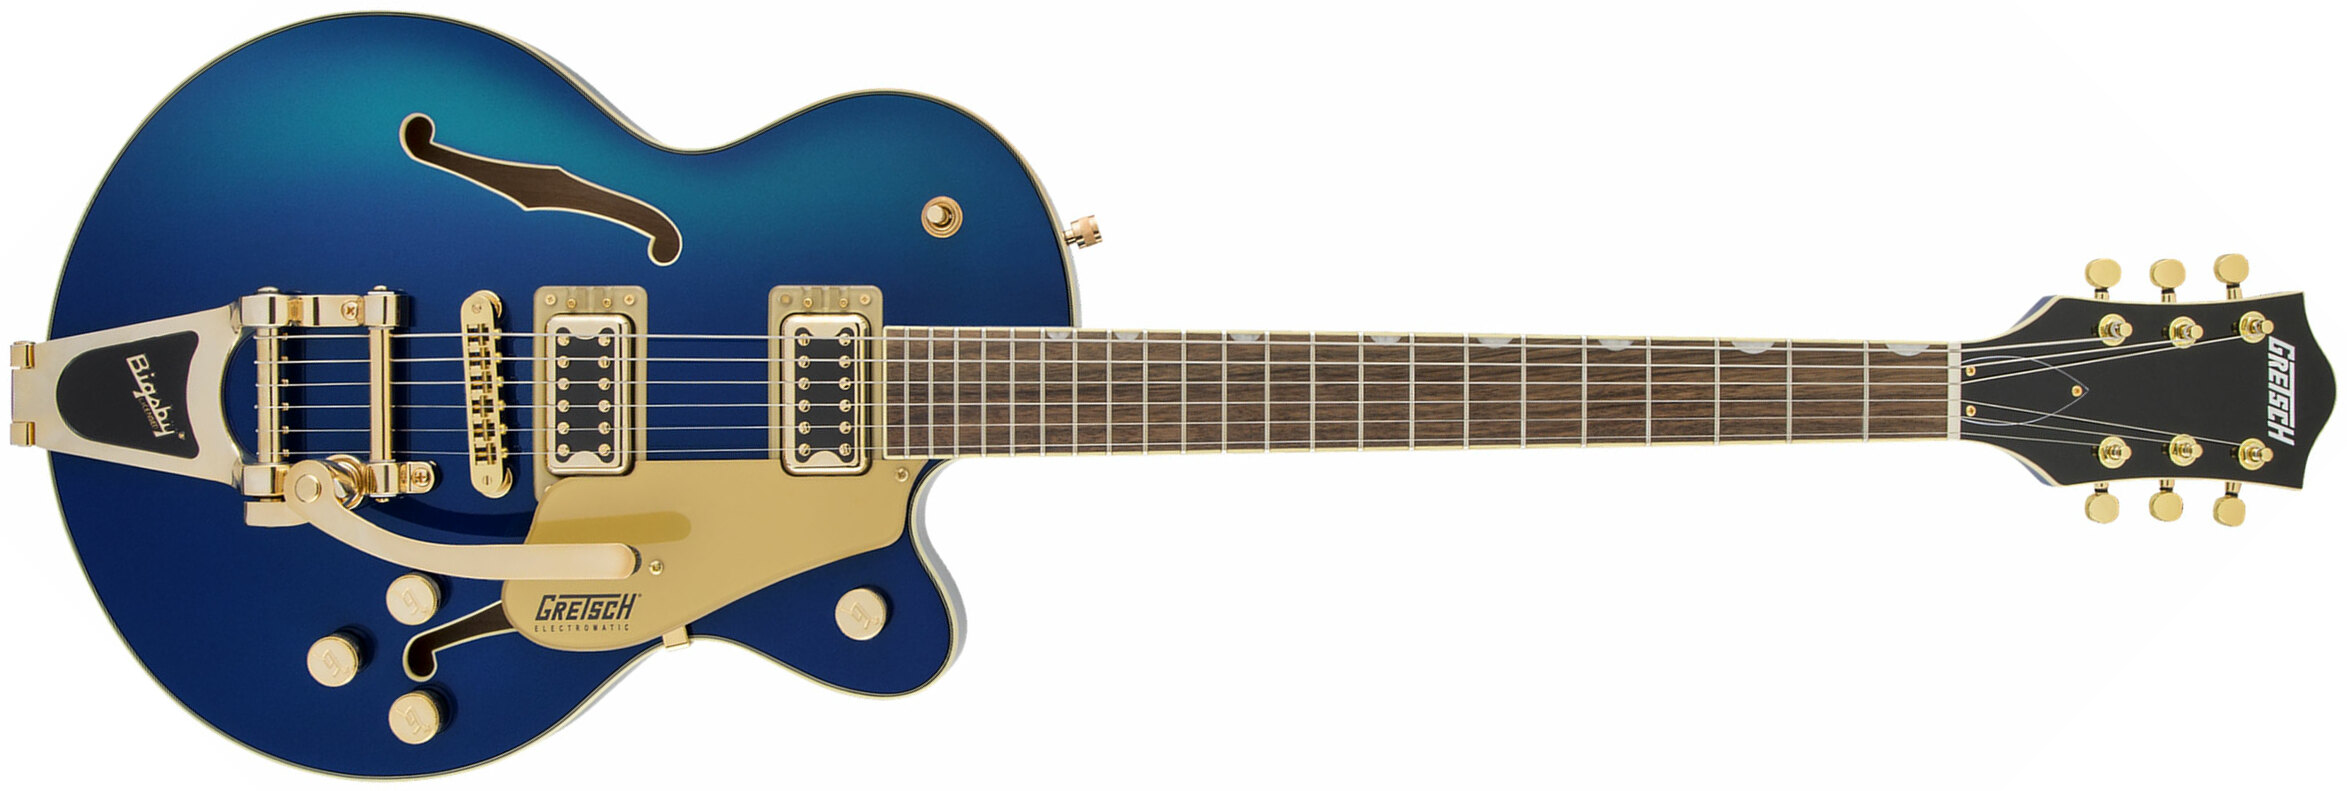 Gretsch G5655tg Electromatic Center Block Jr. Hh Bigsby Lau - Azure Metallic - Semi-hollow electric guitar - Main picture